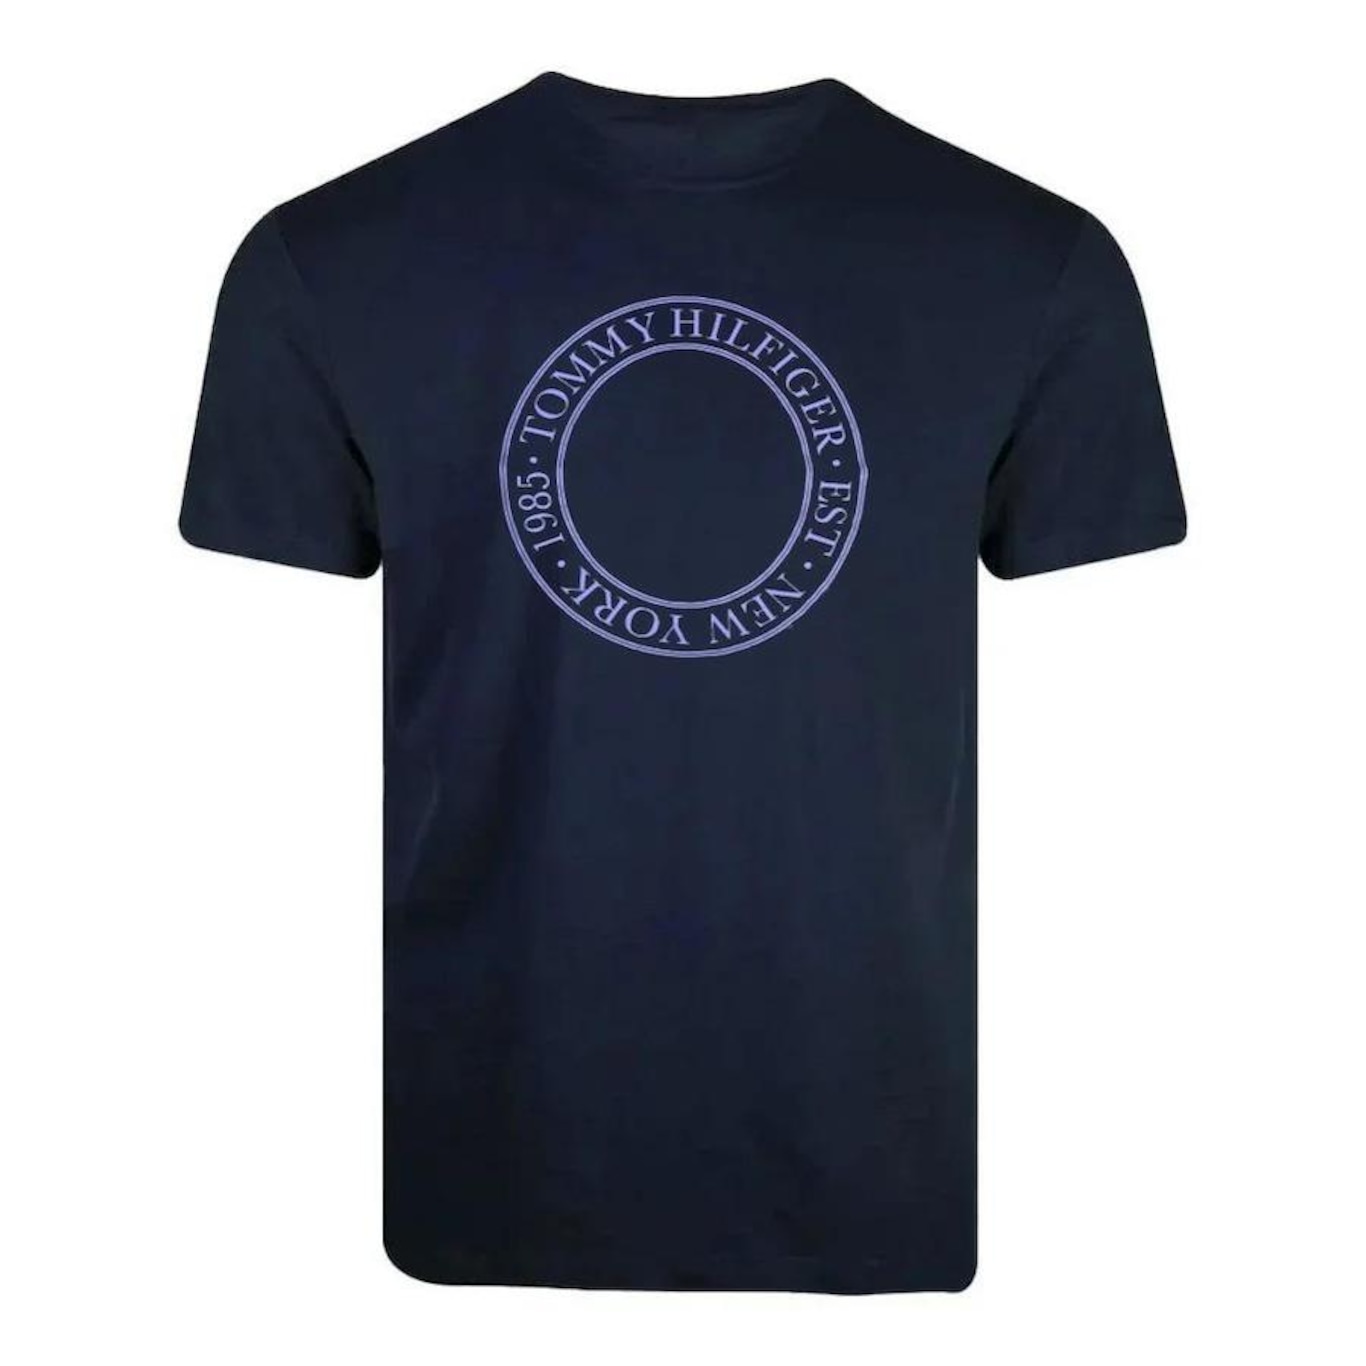 Camiseta Tommy Hilfiger Wcc Essential Cotton Tee Azul - Estilo